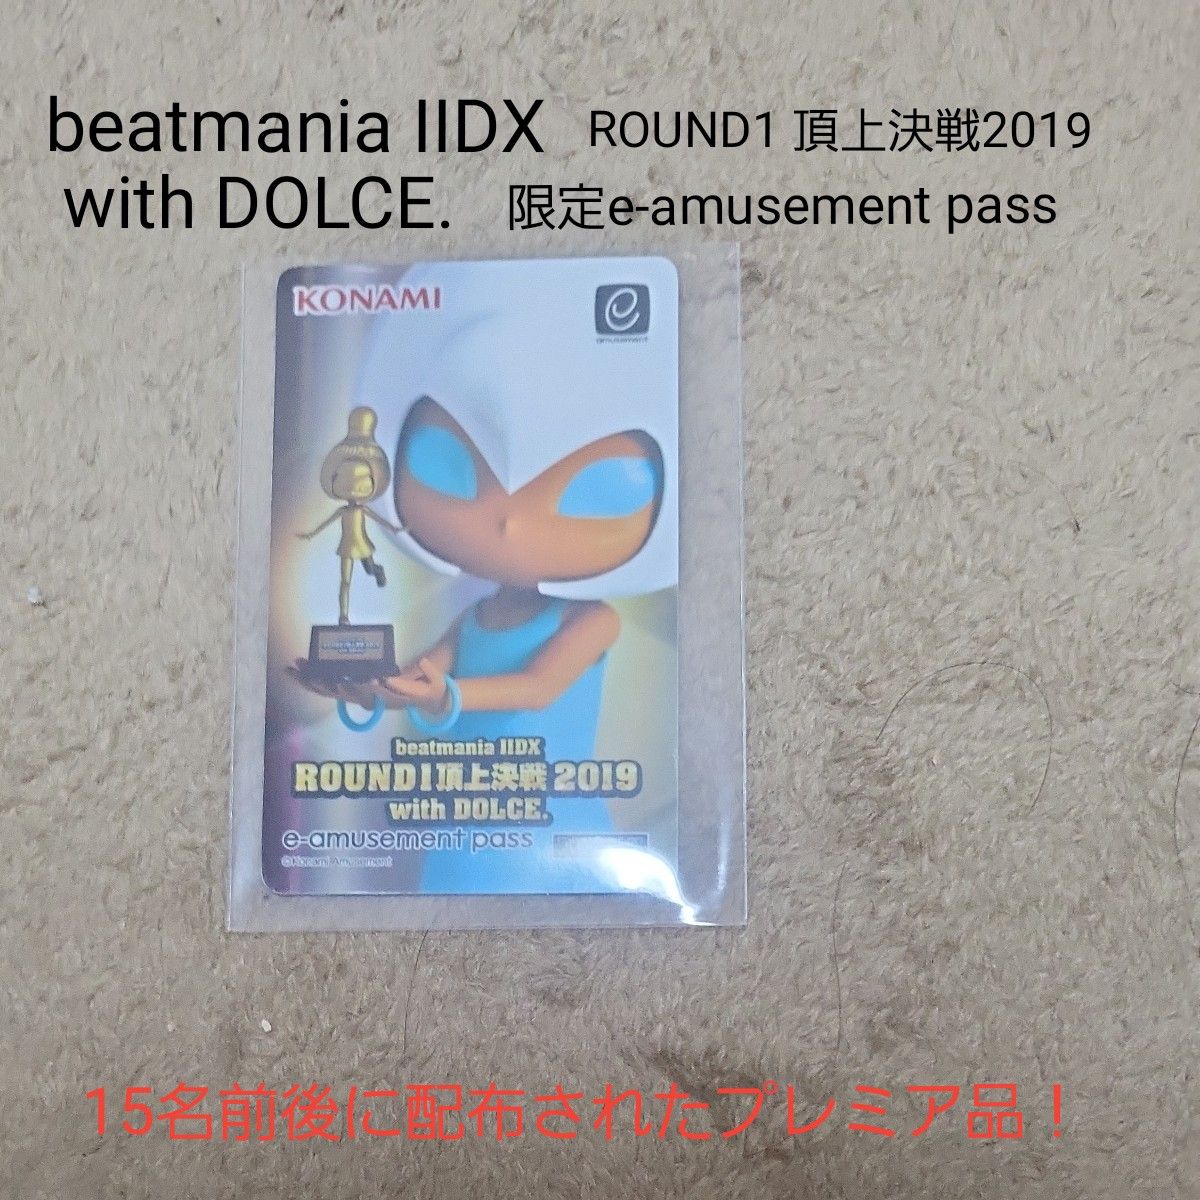 beatmania IIDX ROUND1 頂上決戦 with DOLCE. 限定e-amusement pass